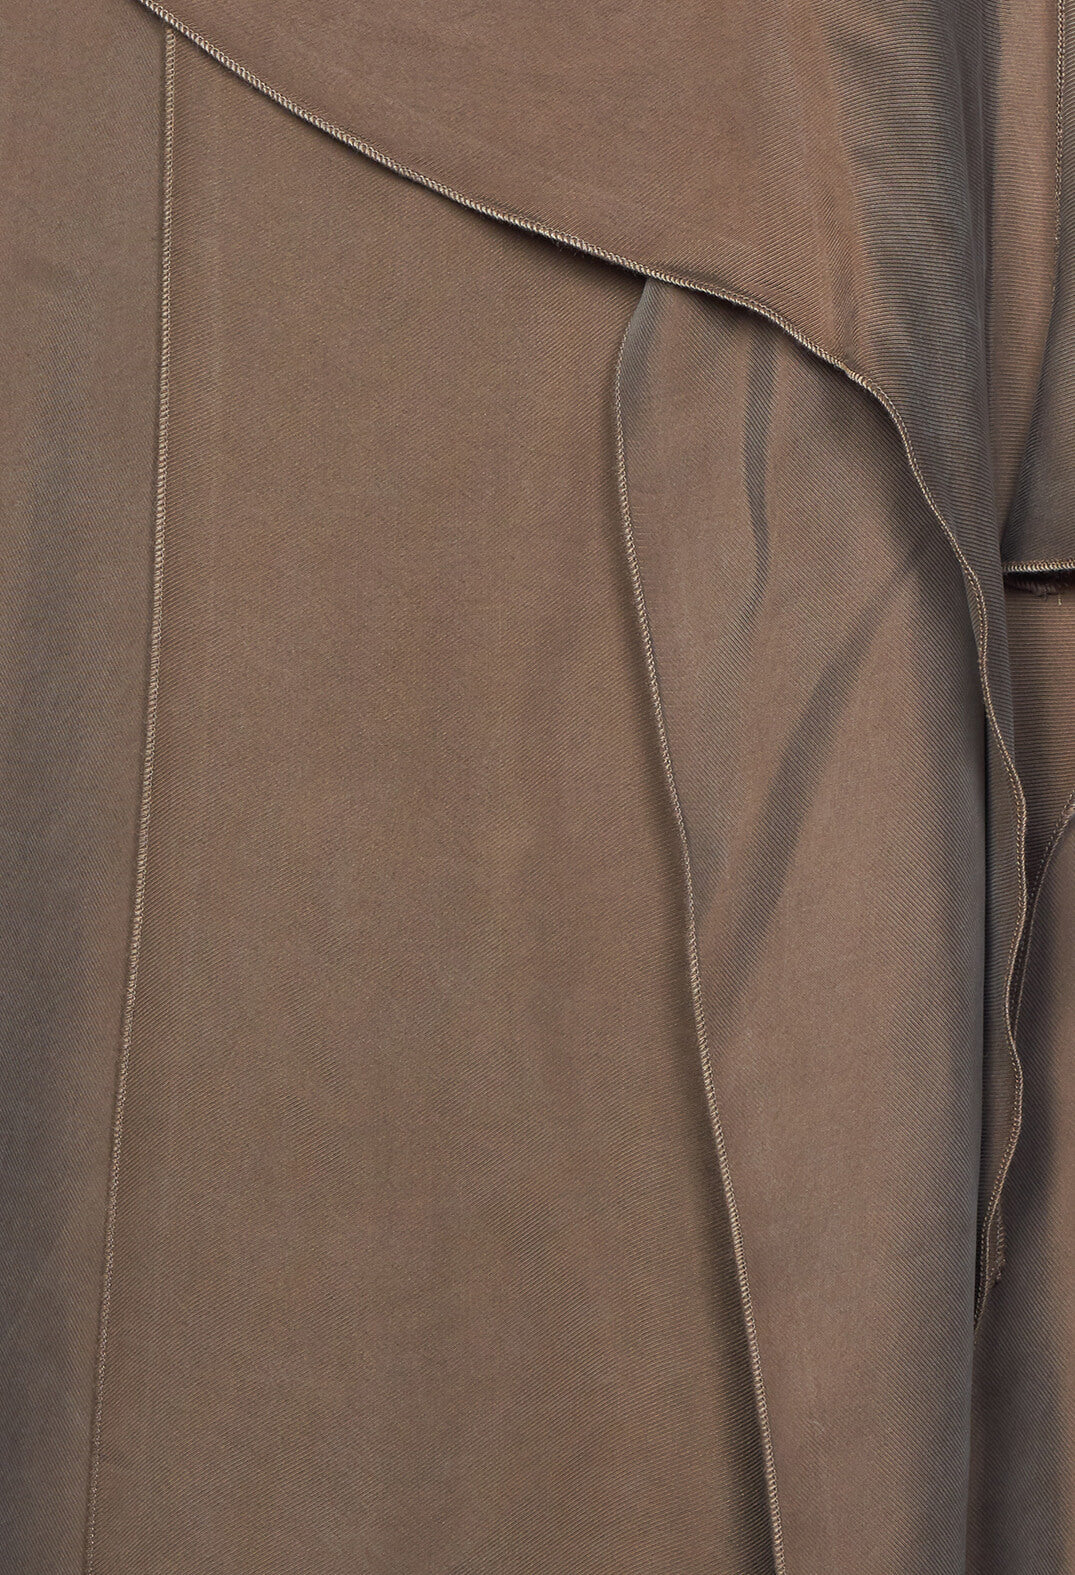 Multilayed Dress with Asymmetric Neckline in Khaki